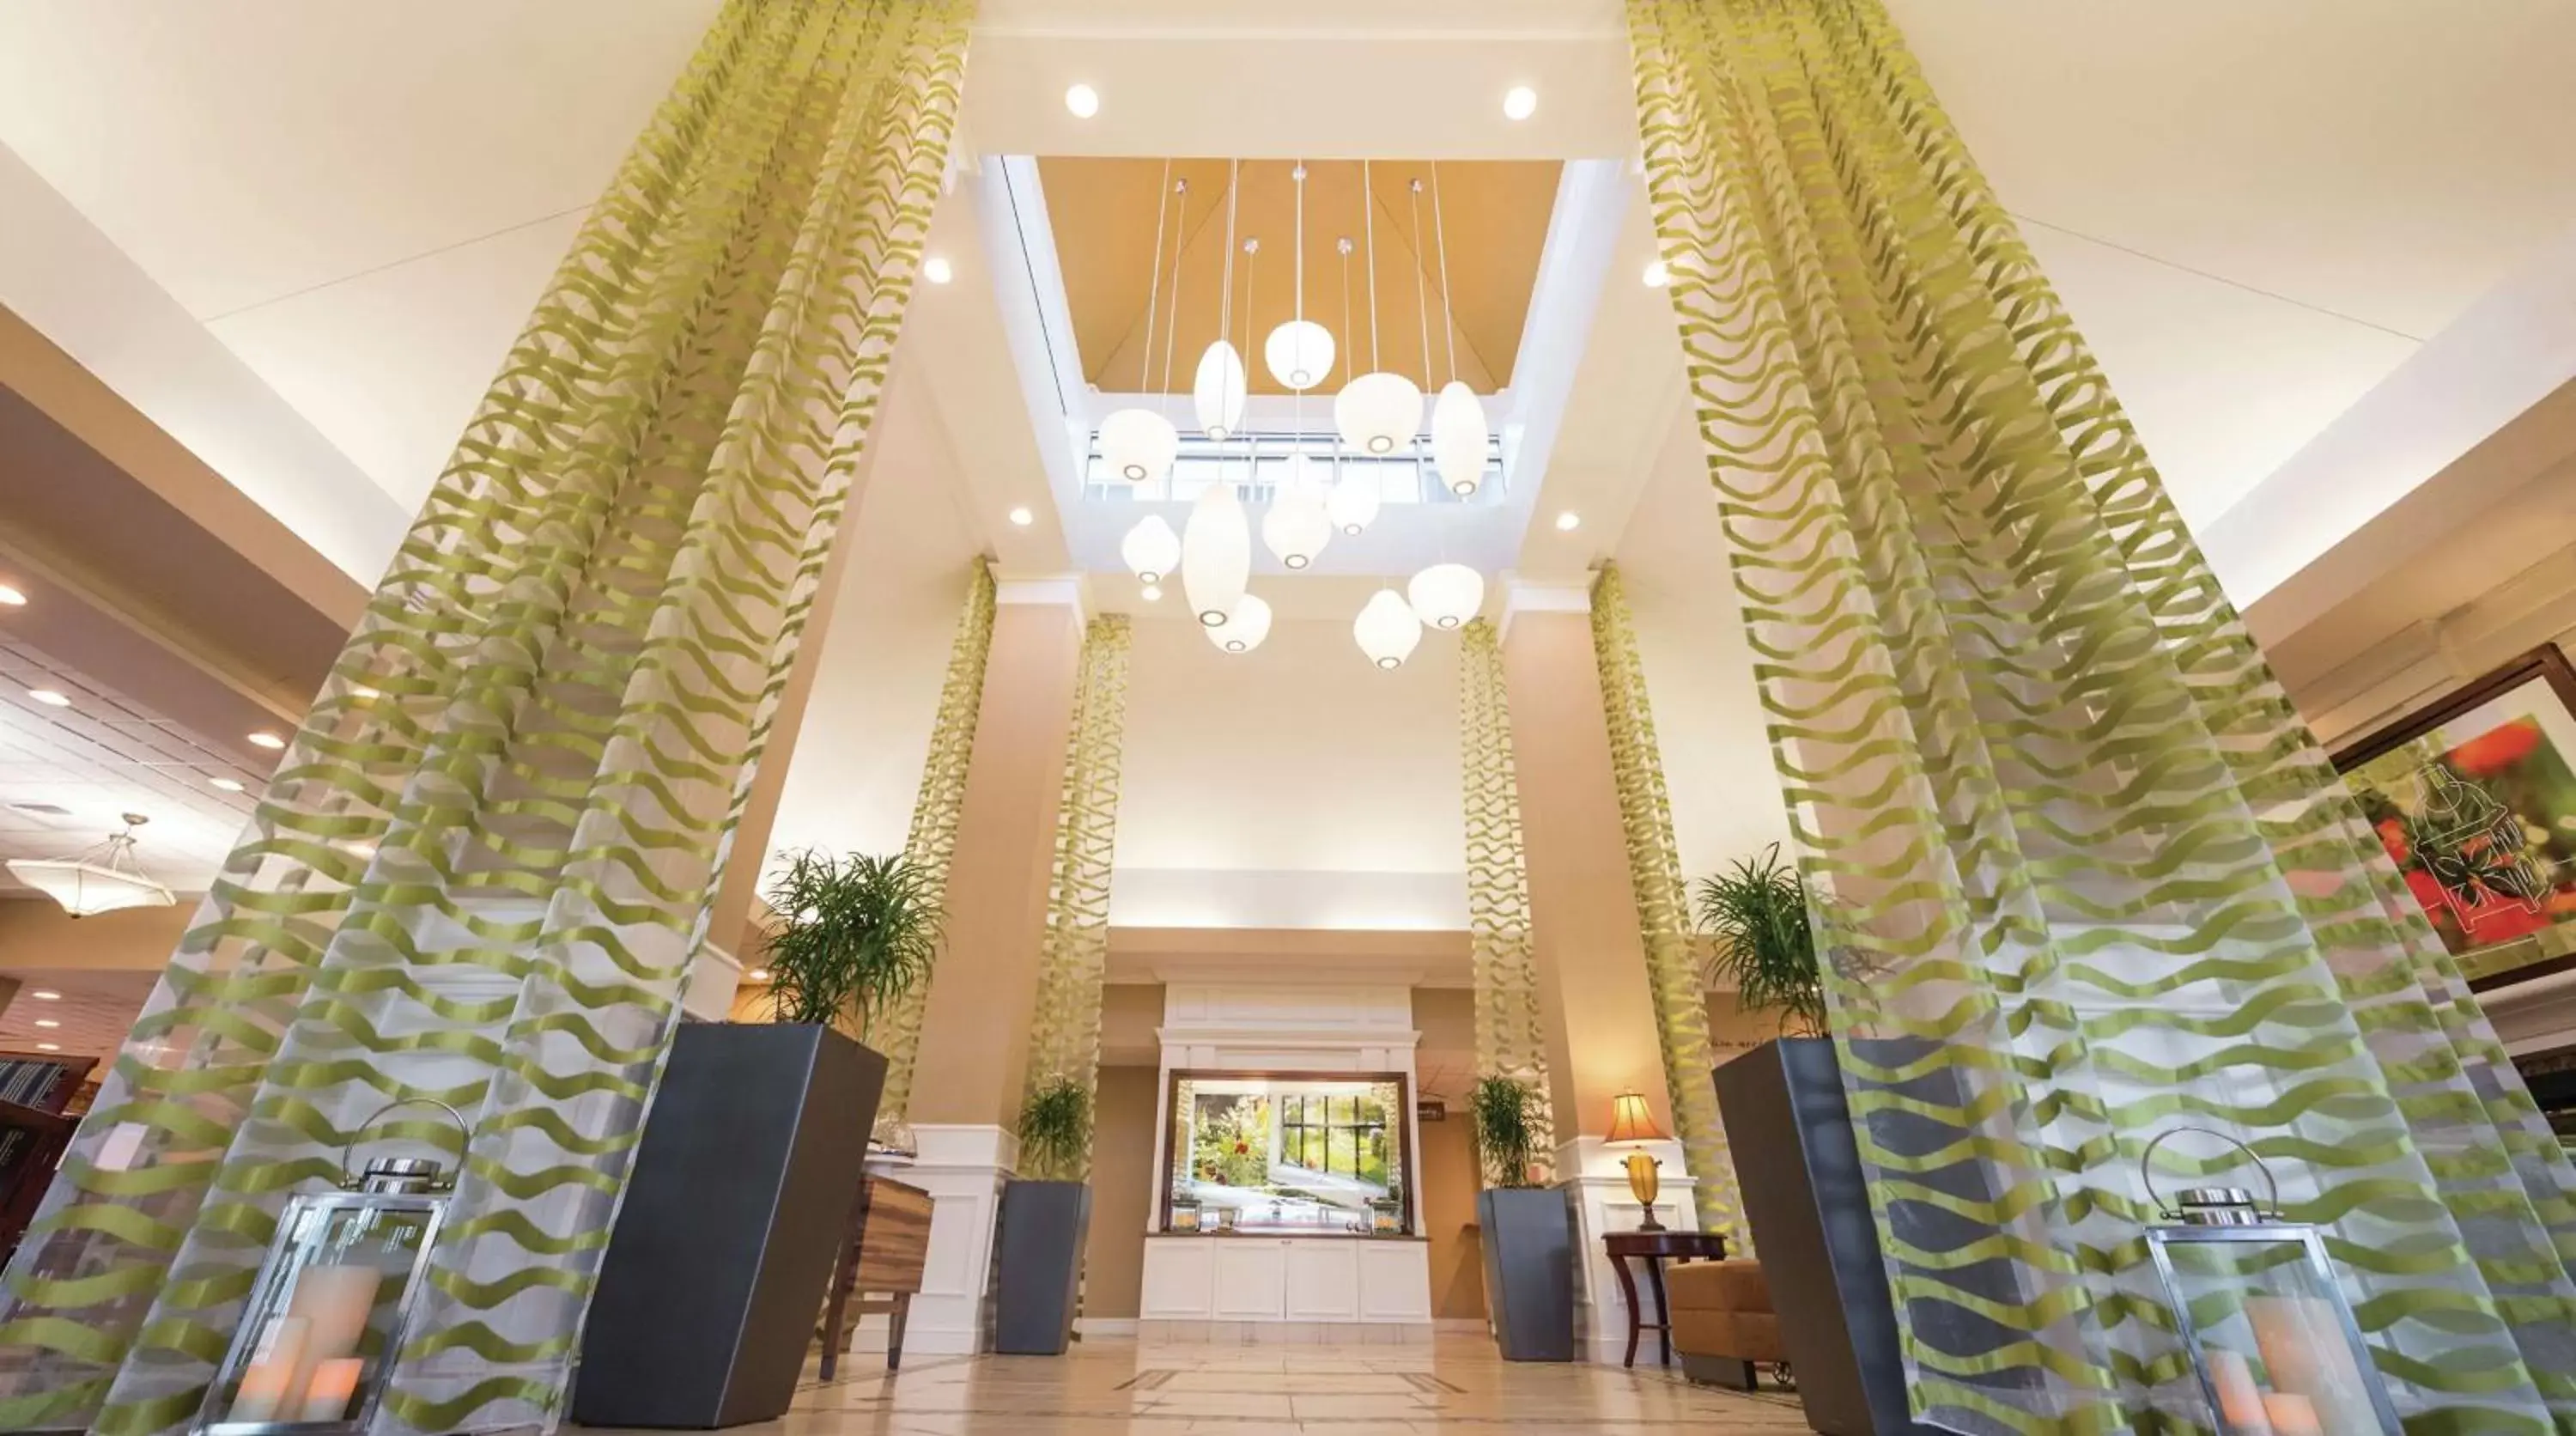 Lobby or reception in Hilton Garden Inn Meridian